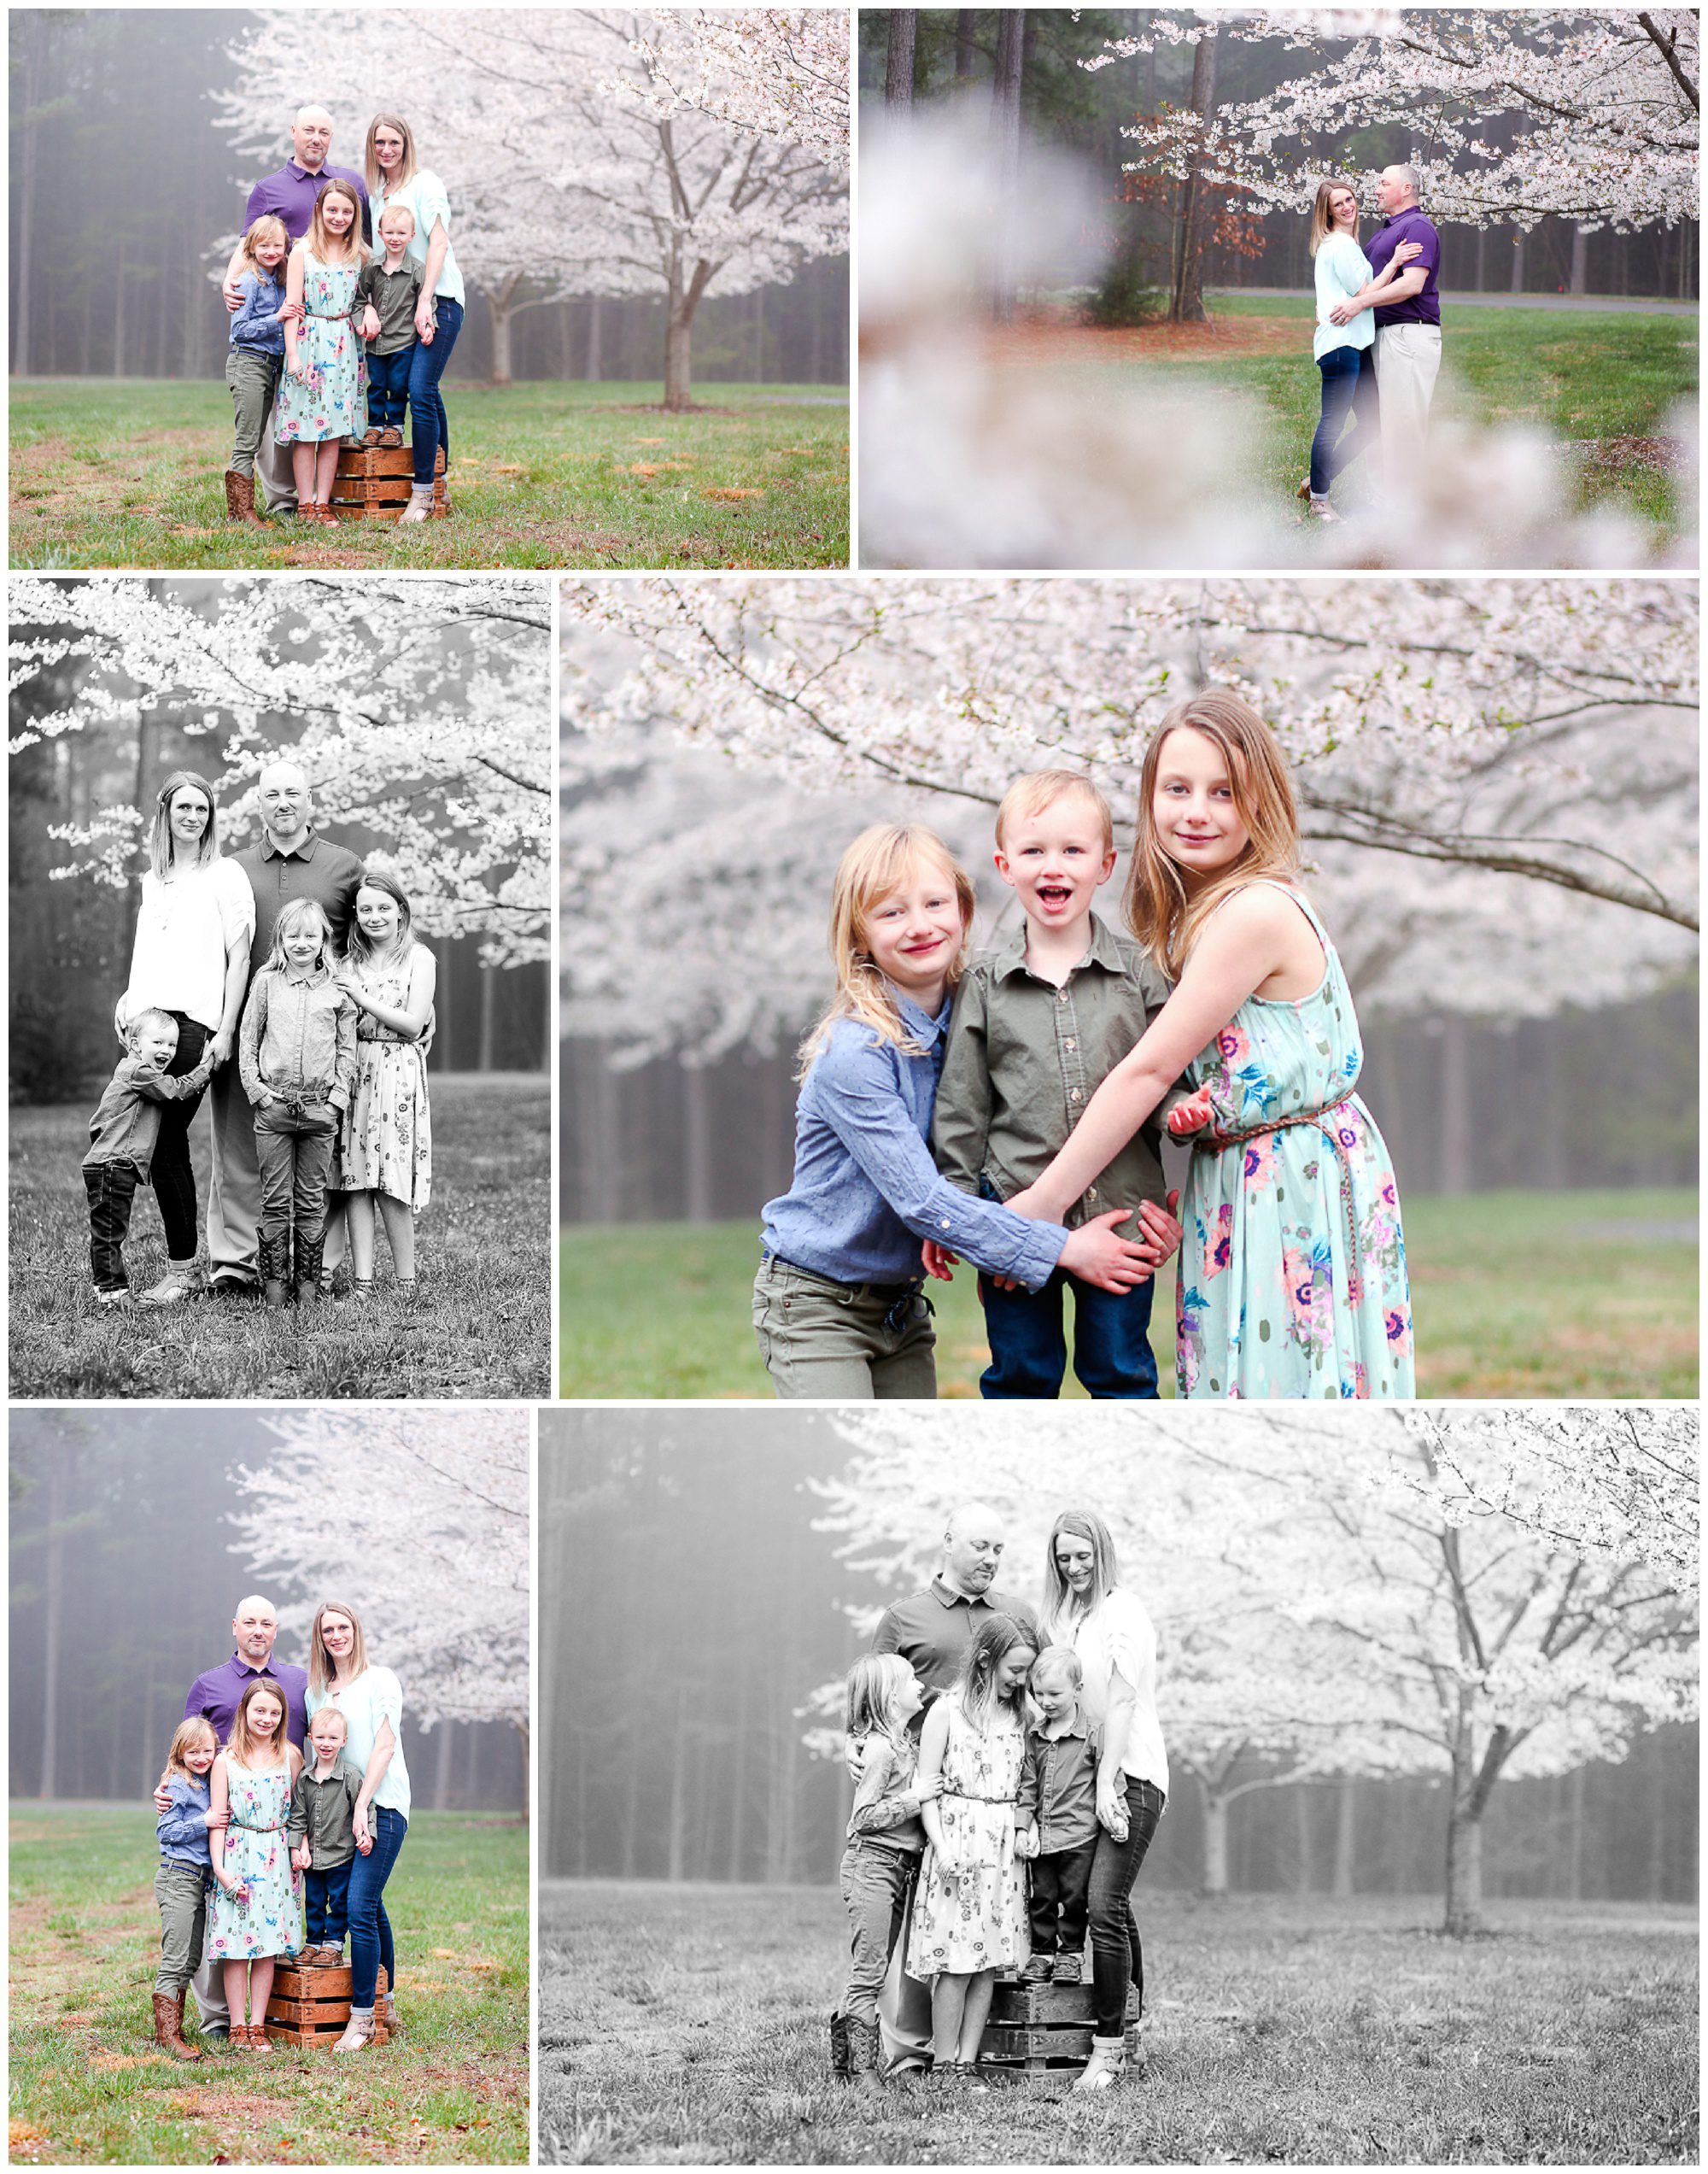 fluvanna charlottesville spring family children blossoms april easter fog mist siblings virginia photographer portrait pictures photography